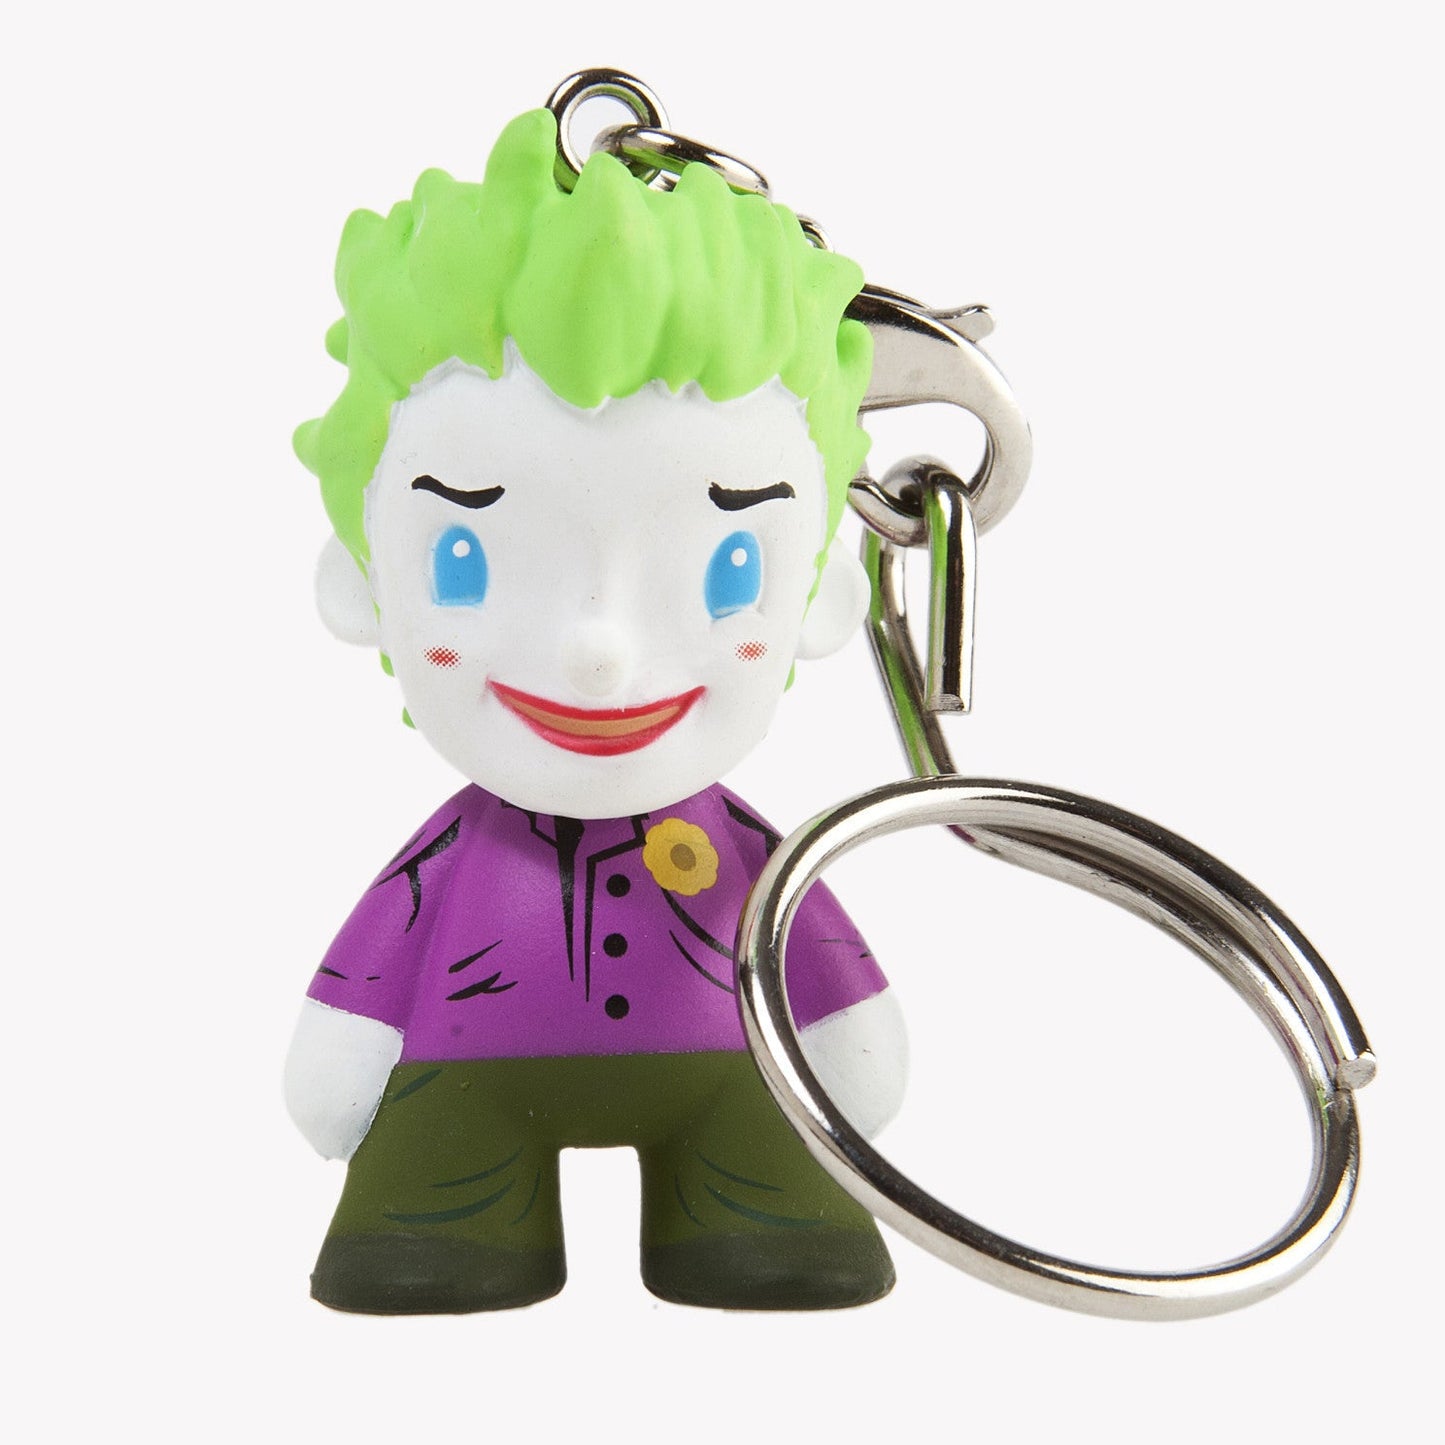 Kidrobot x DC Comics Keychain Series - Joker